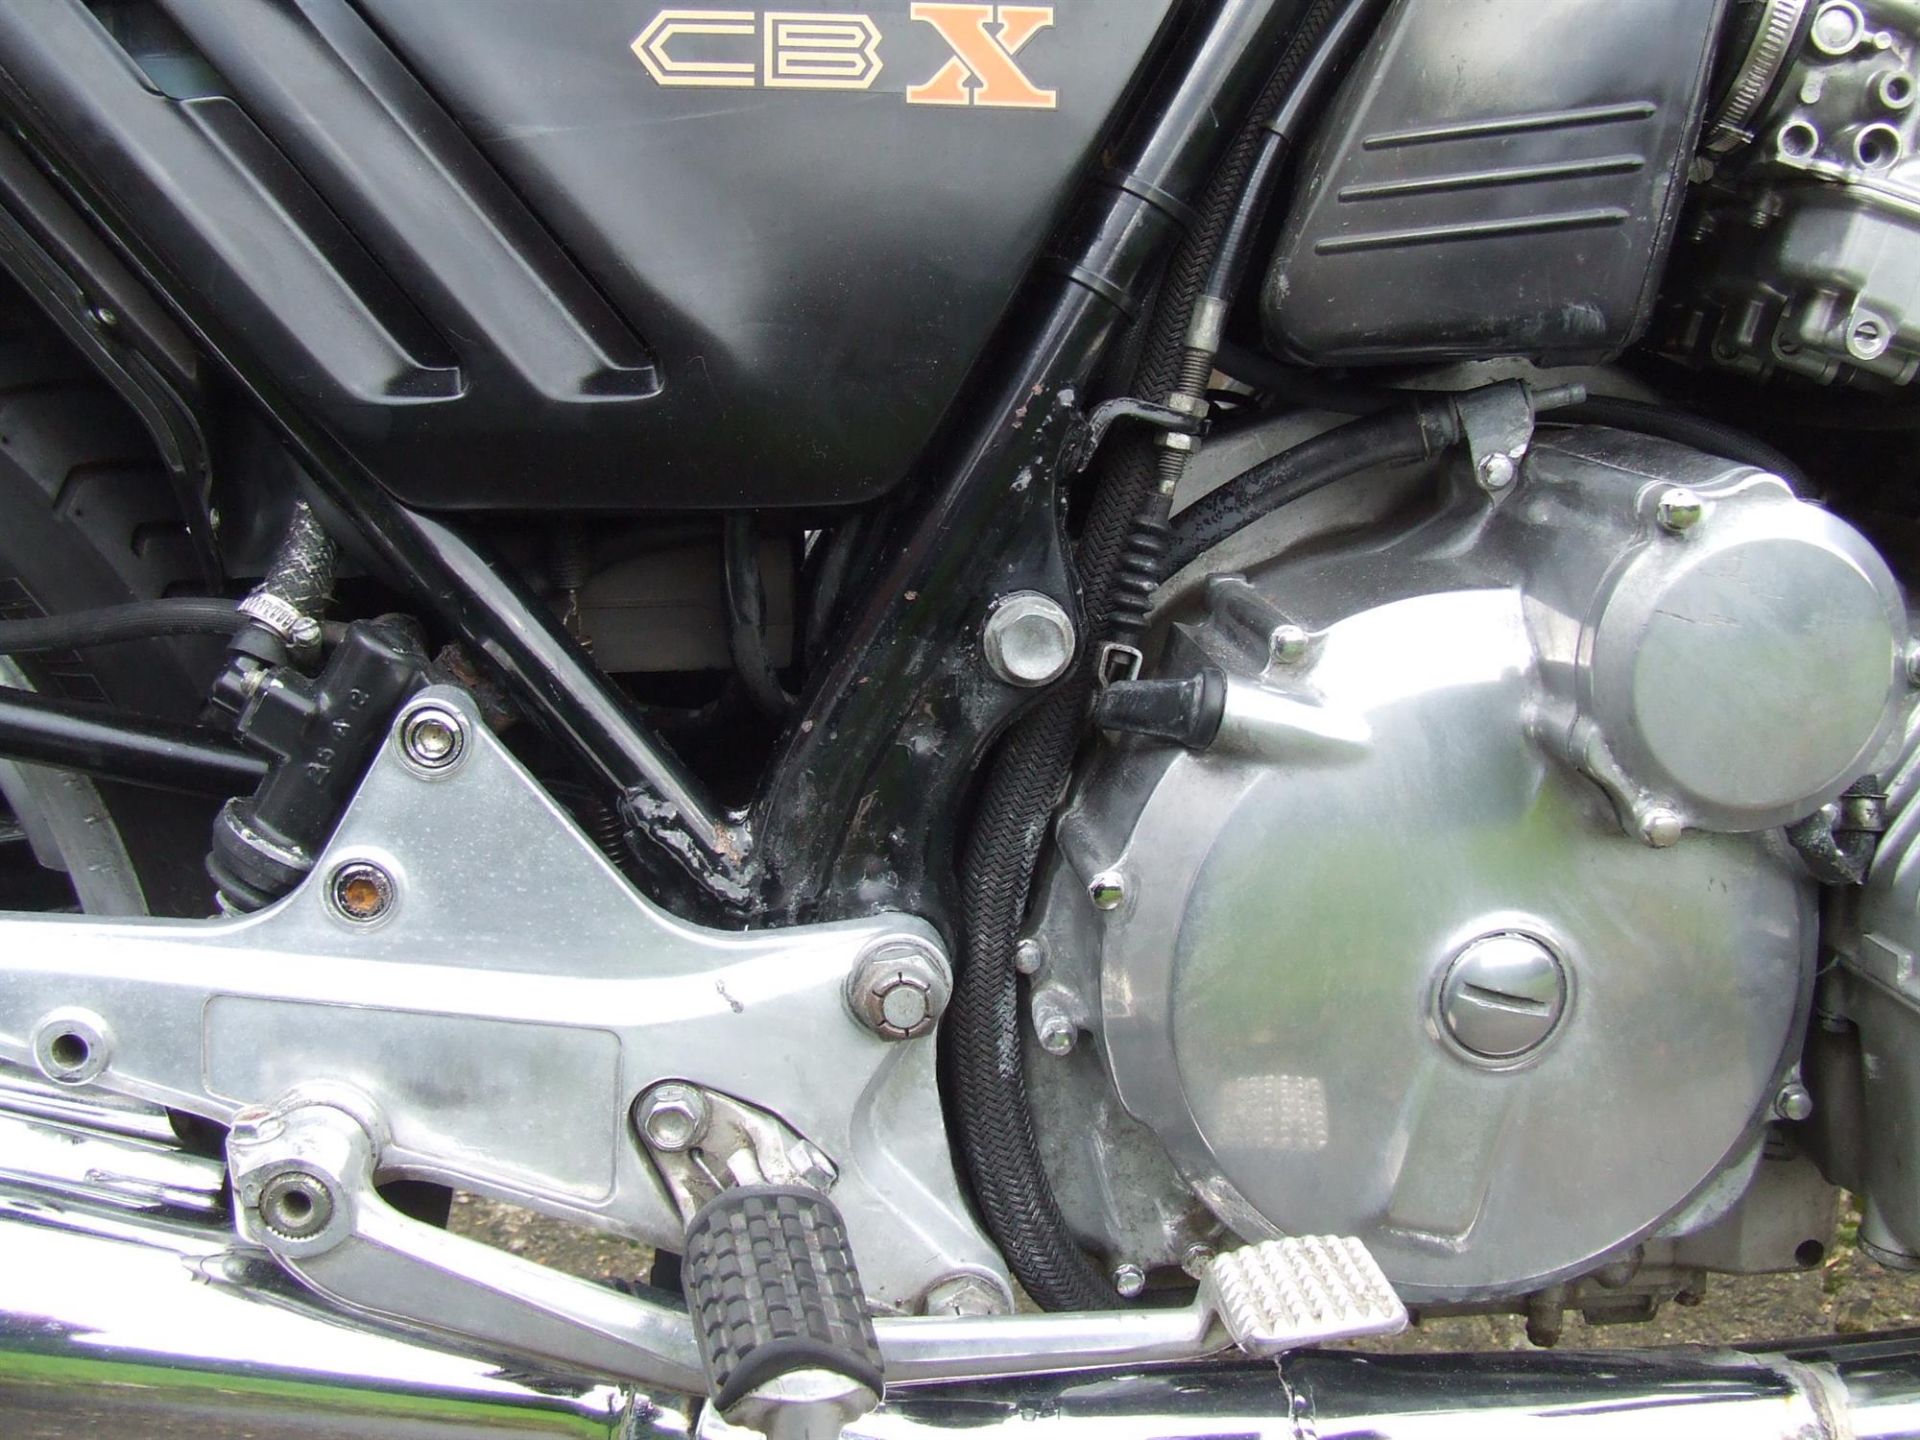 1978 Honda CBX 1000 1,047cc - Image 7 of 10